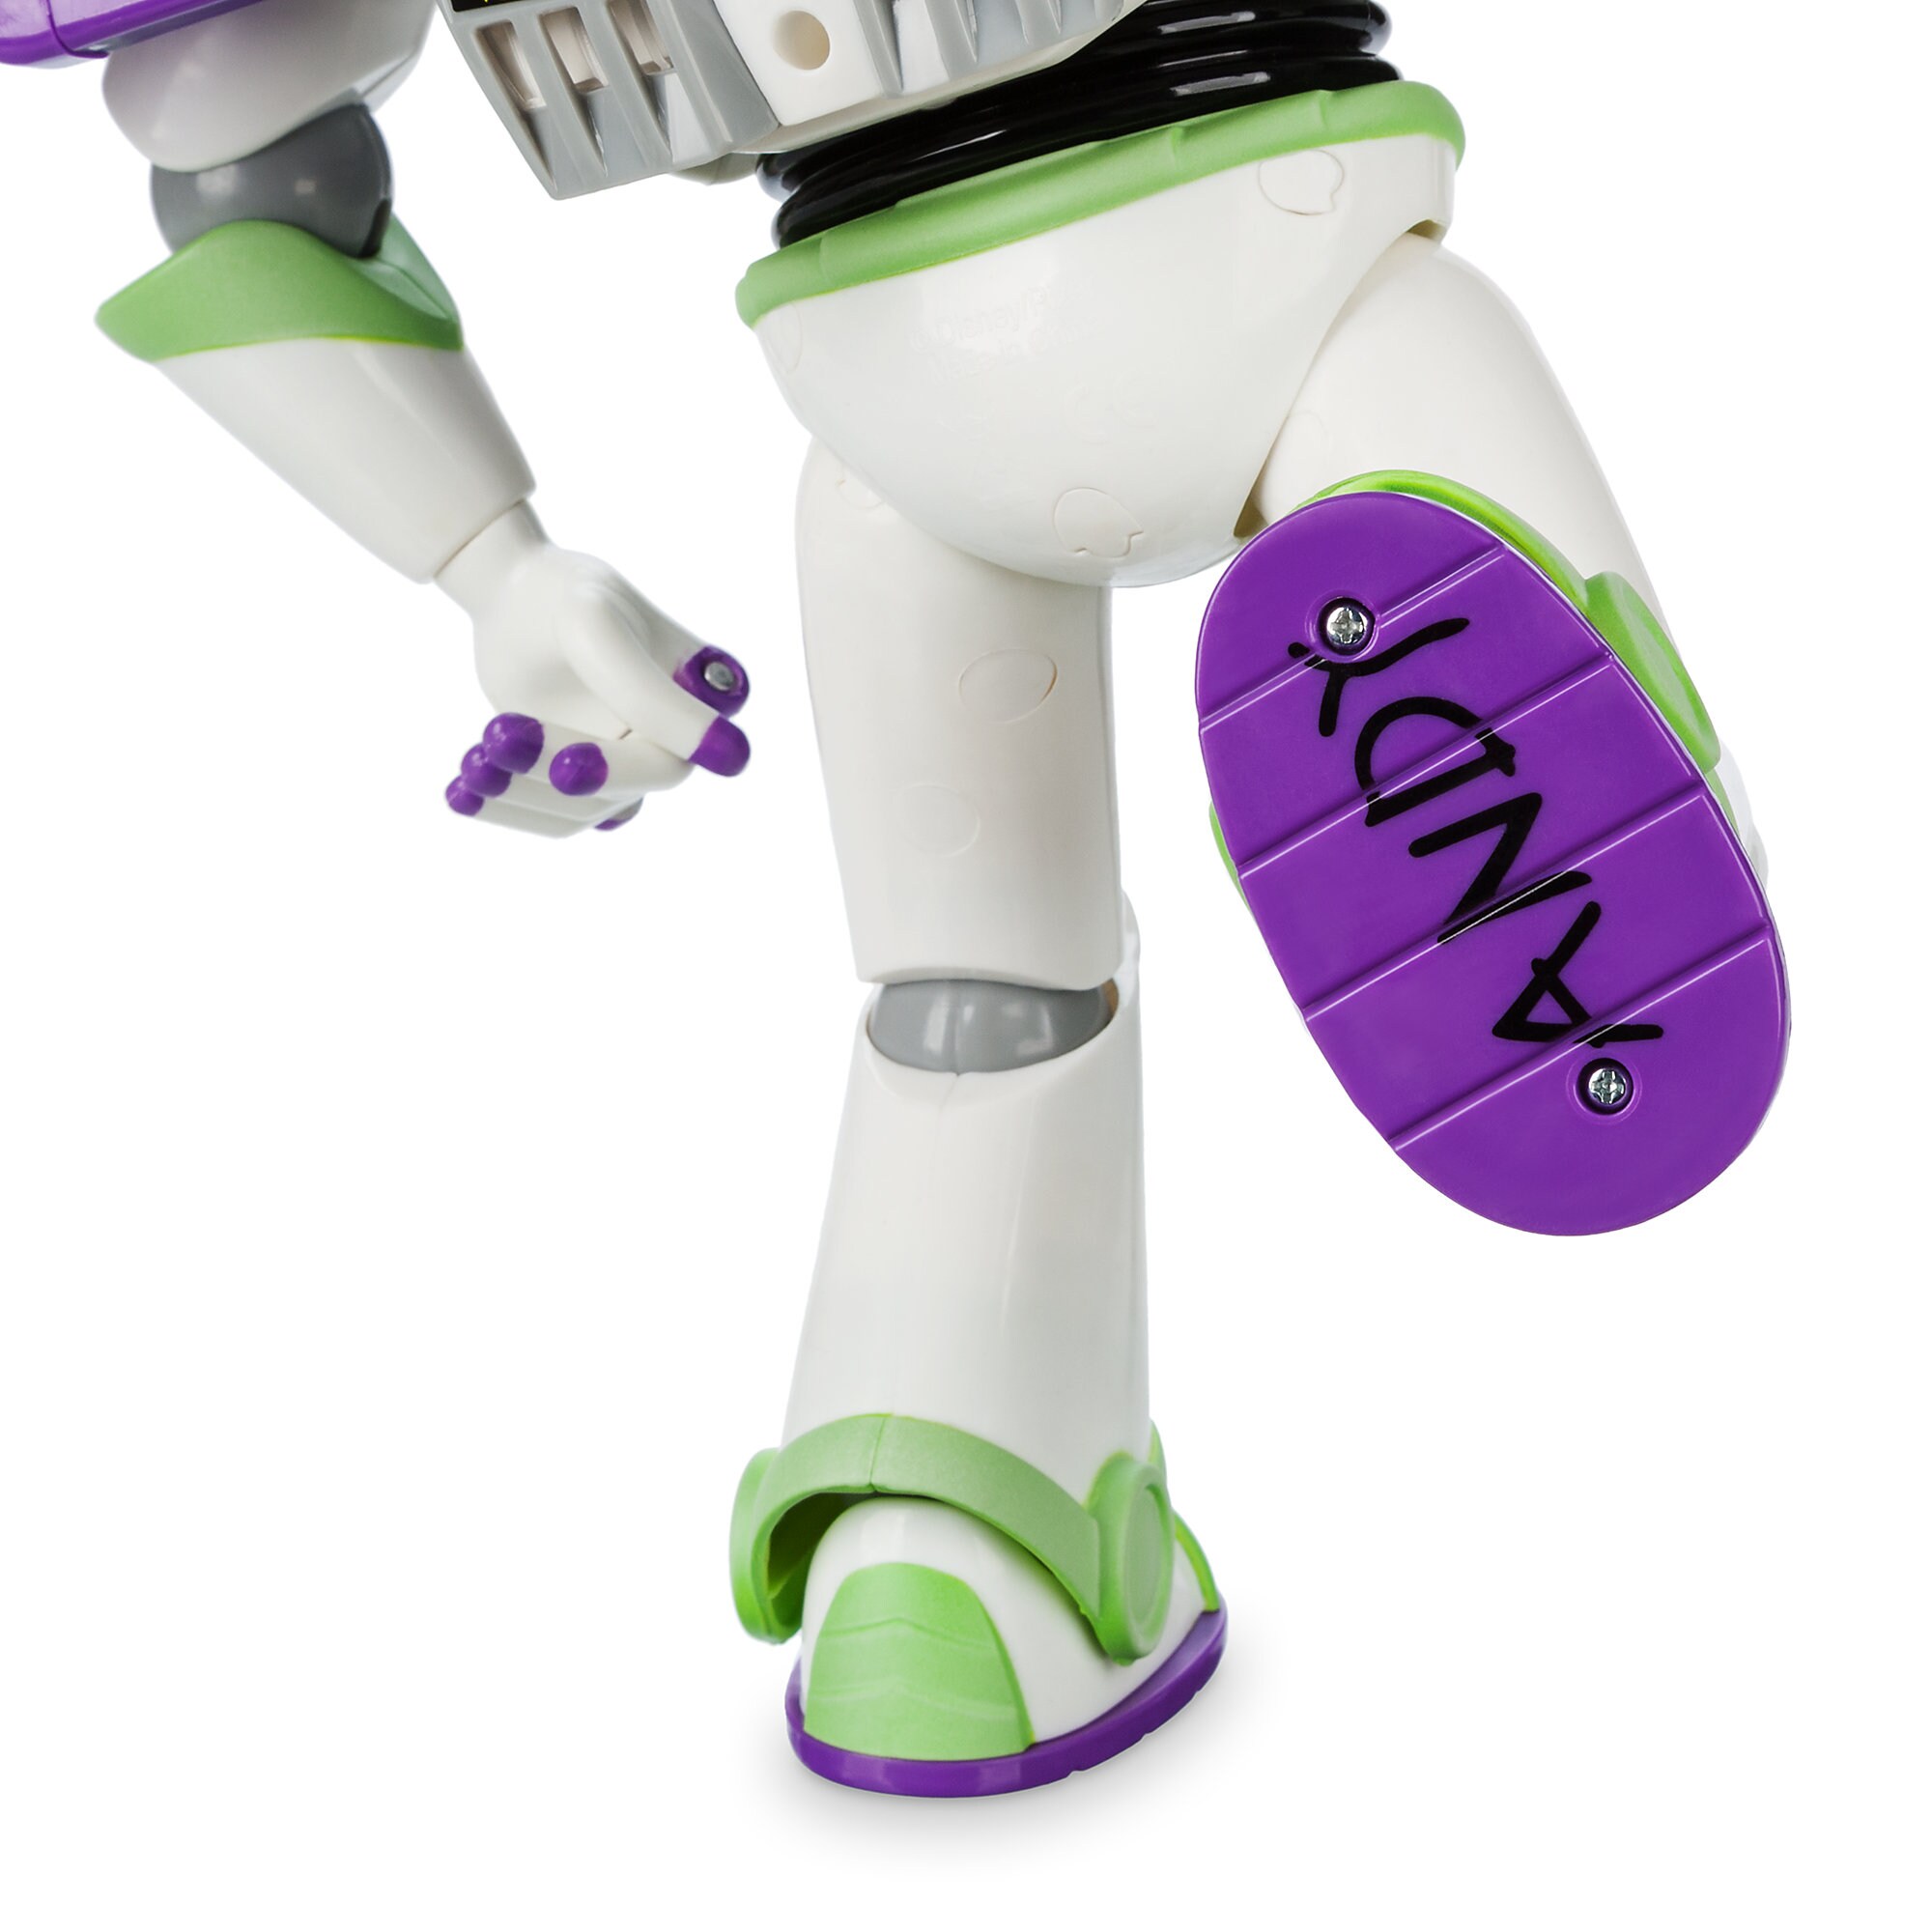 Buzz Lightyear Interactive Talking Action Figure 12 Buy Now Dis 5b8 